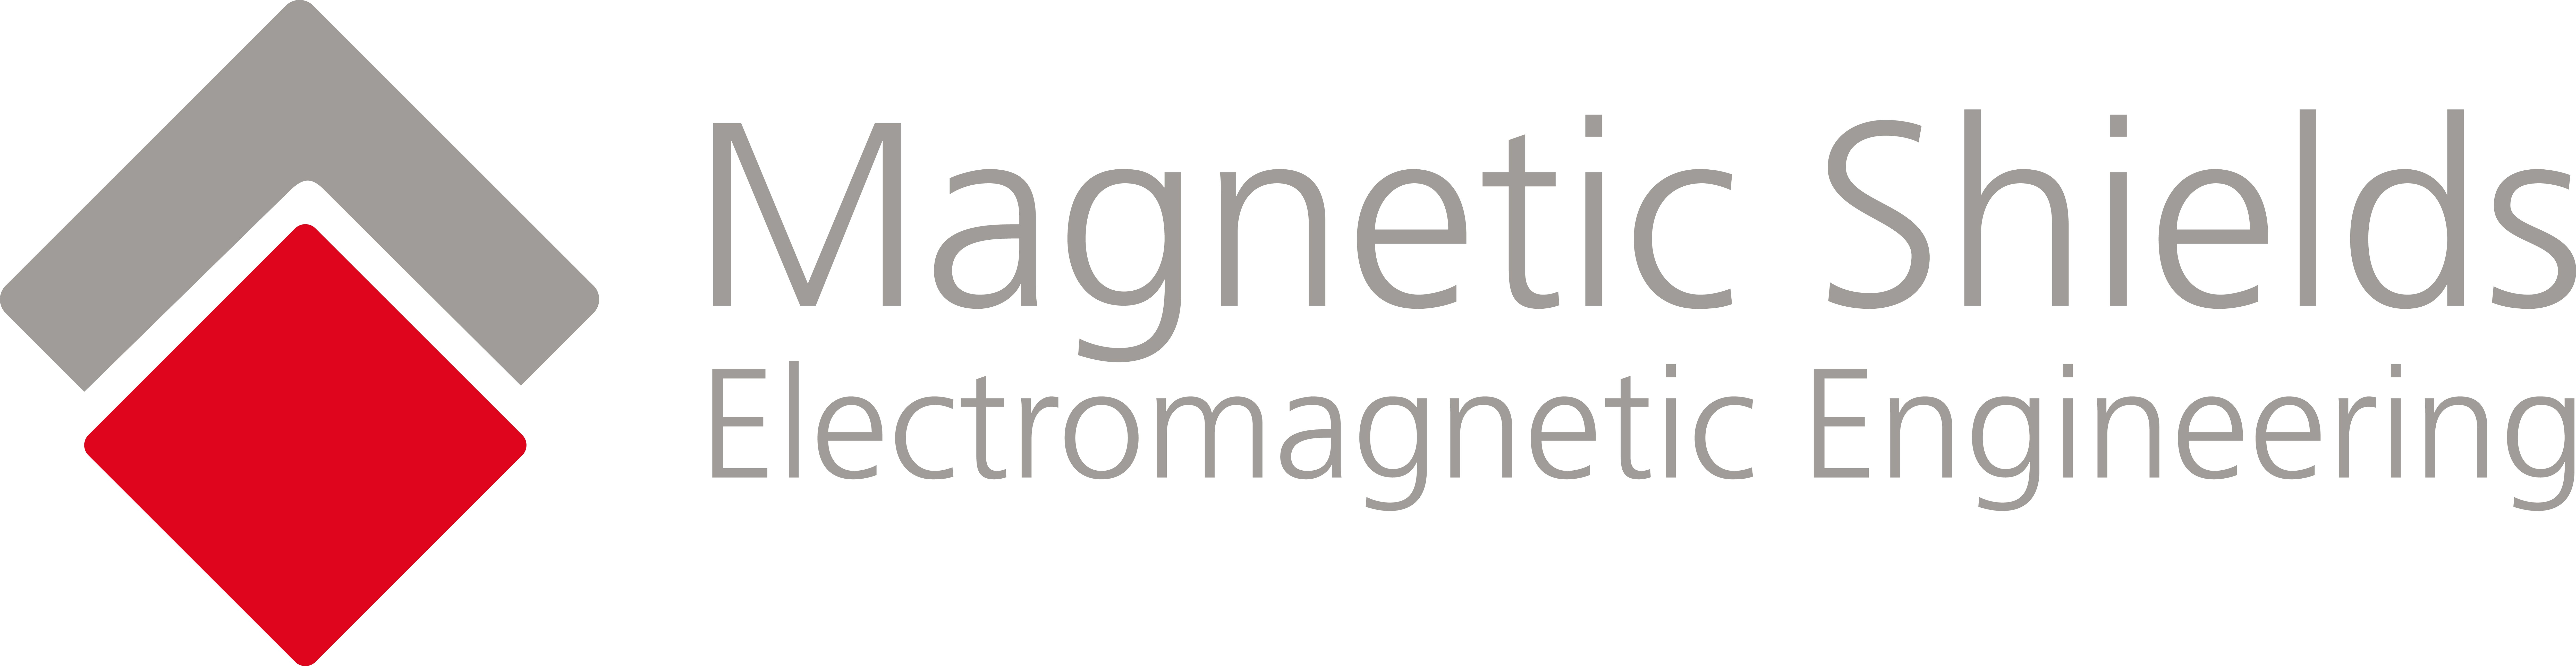 Magnetic Shields Ltd - Perekrutan TribePost Terbatas